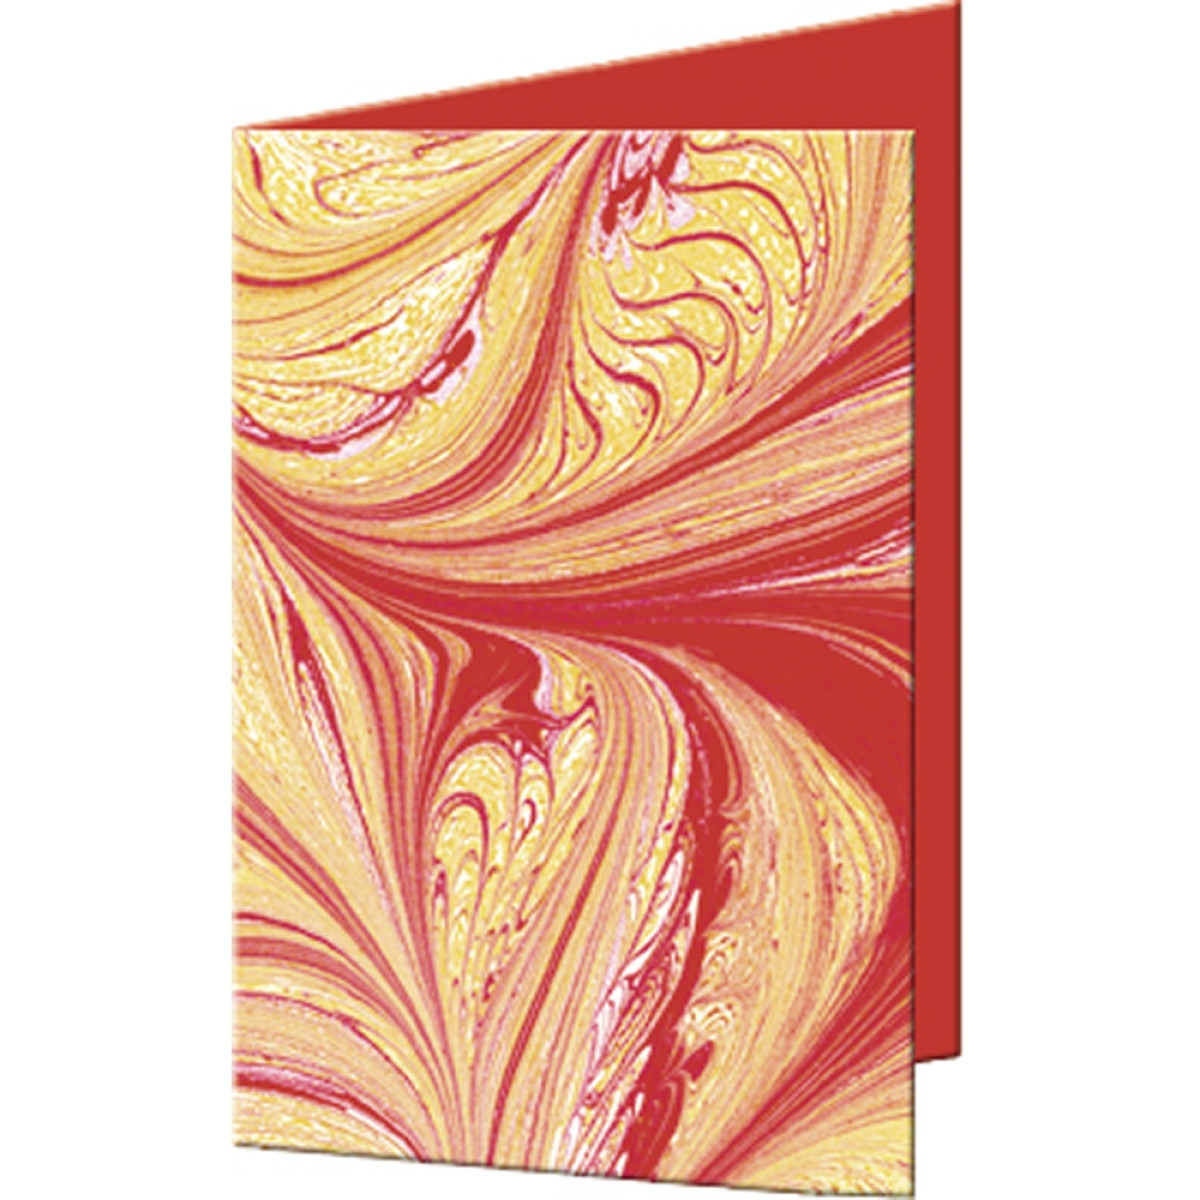 Grußkarten "Art" mit Kuverts 113 x 165 mm rubinrot